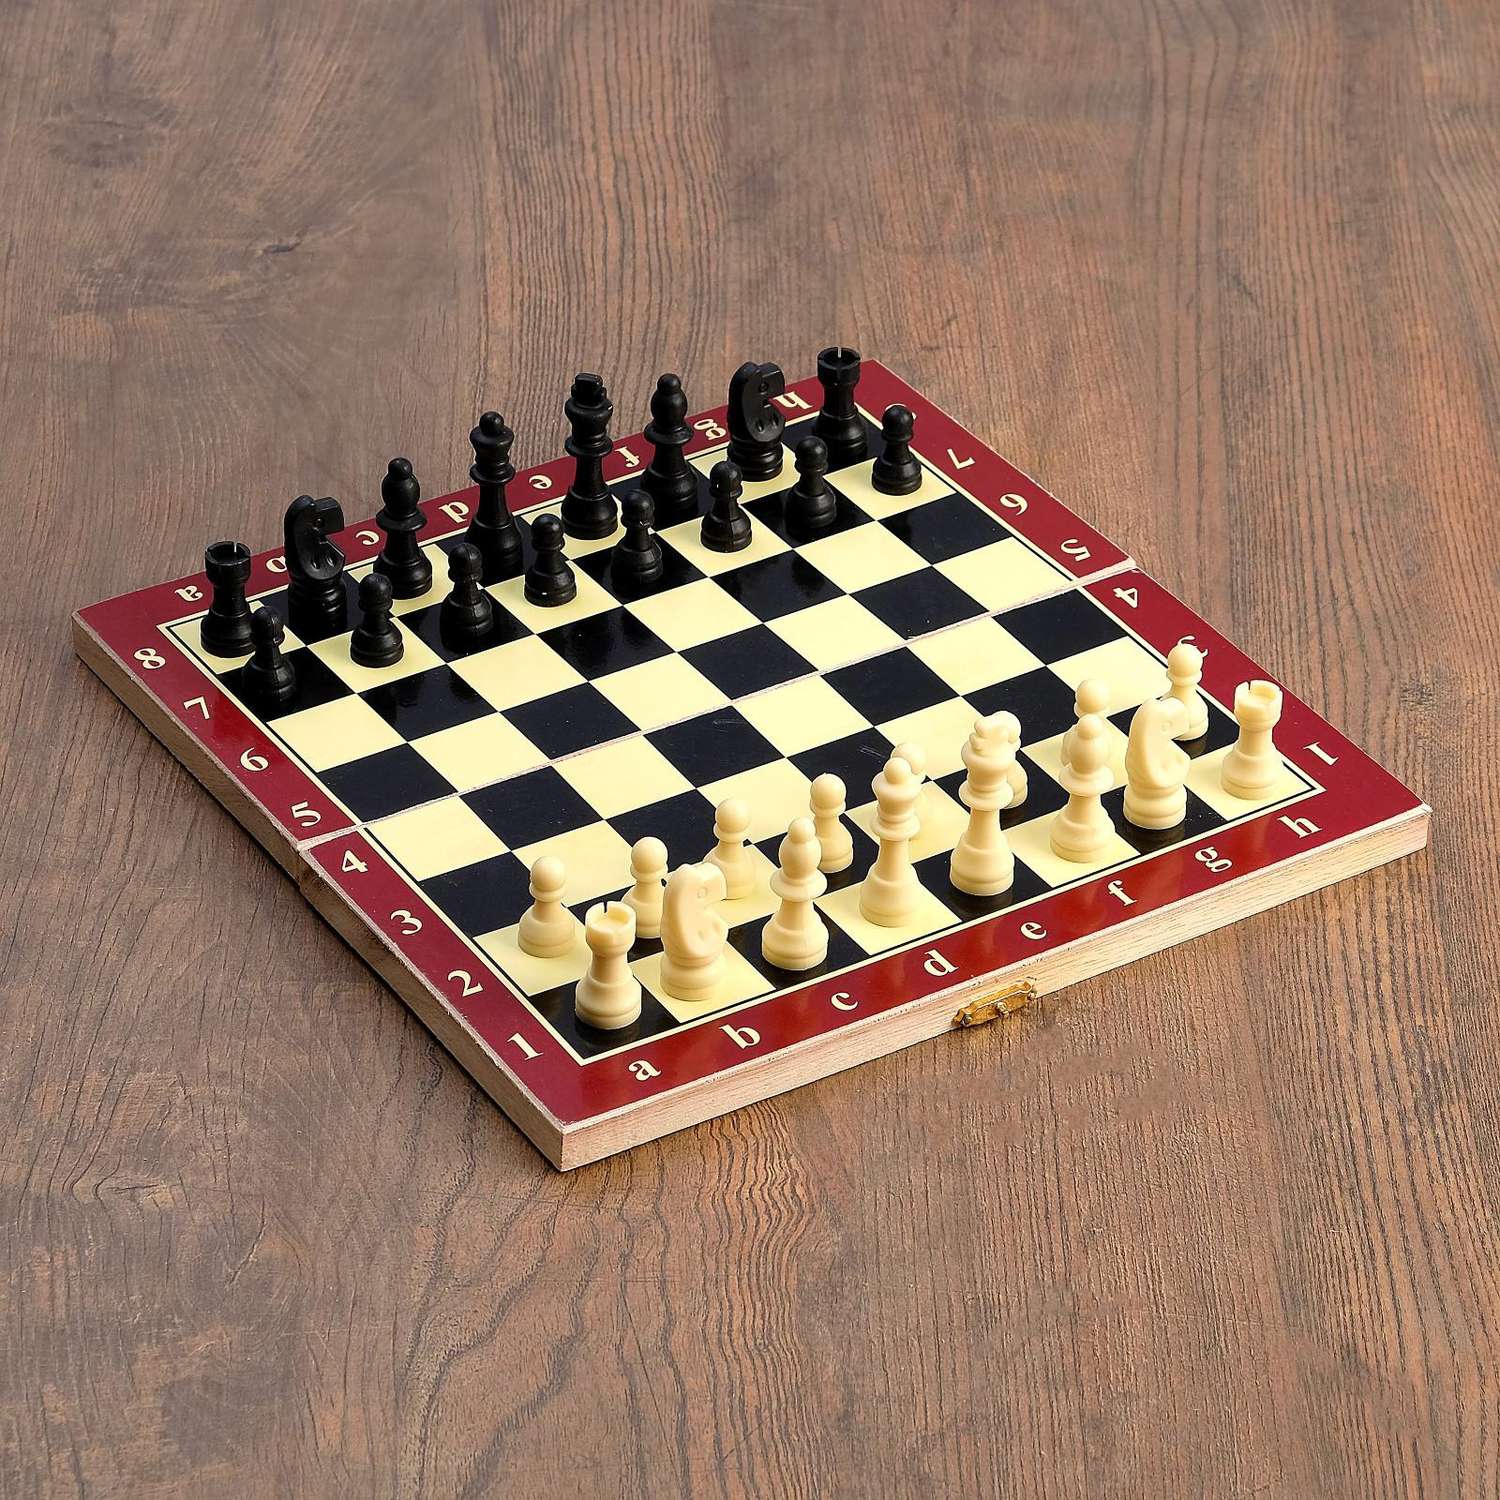 Настольная игра Sima-Land 3 в 1 Карнал нарды шахматы шашки фишки дер фигуры пластик 29х29 см - фото 2